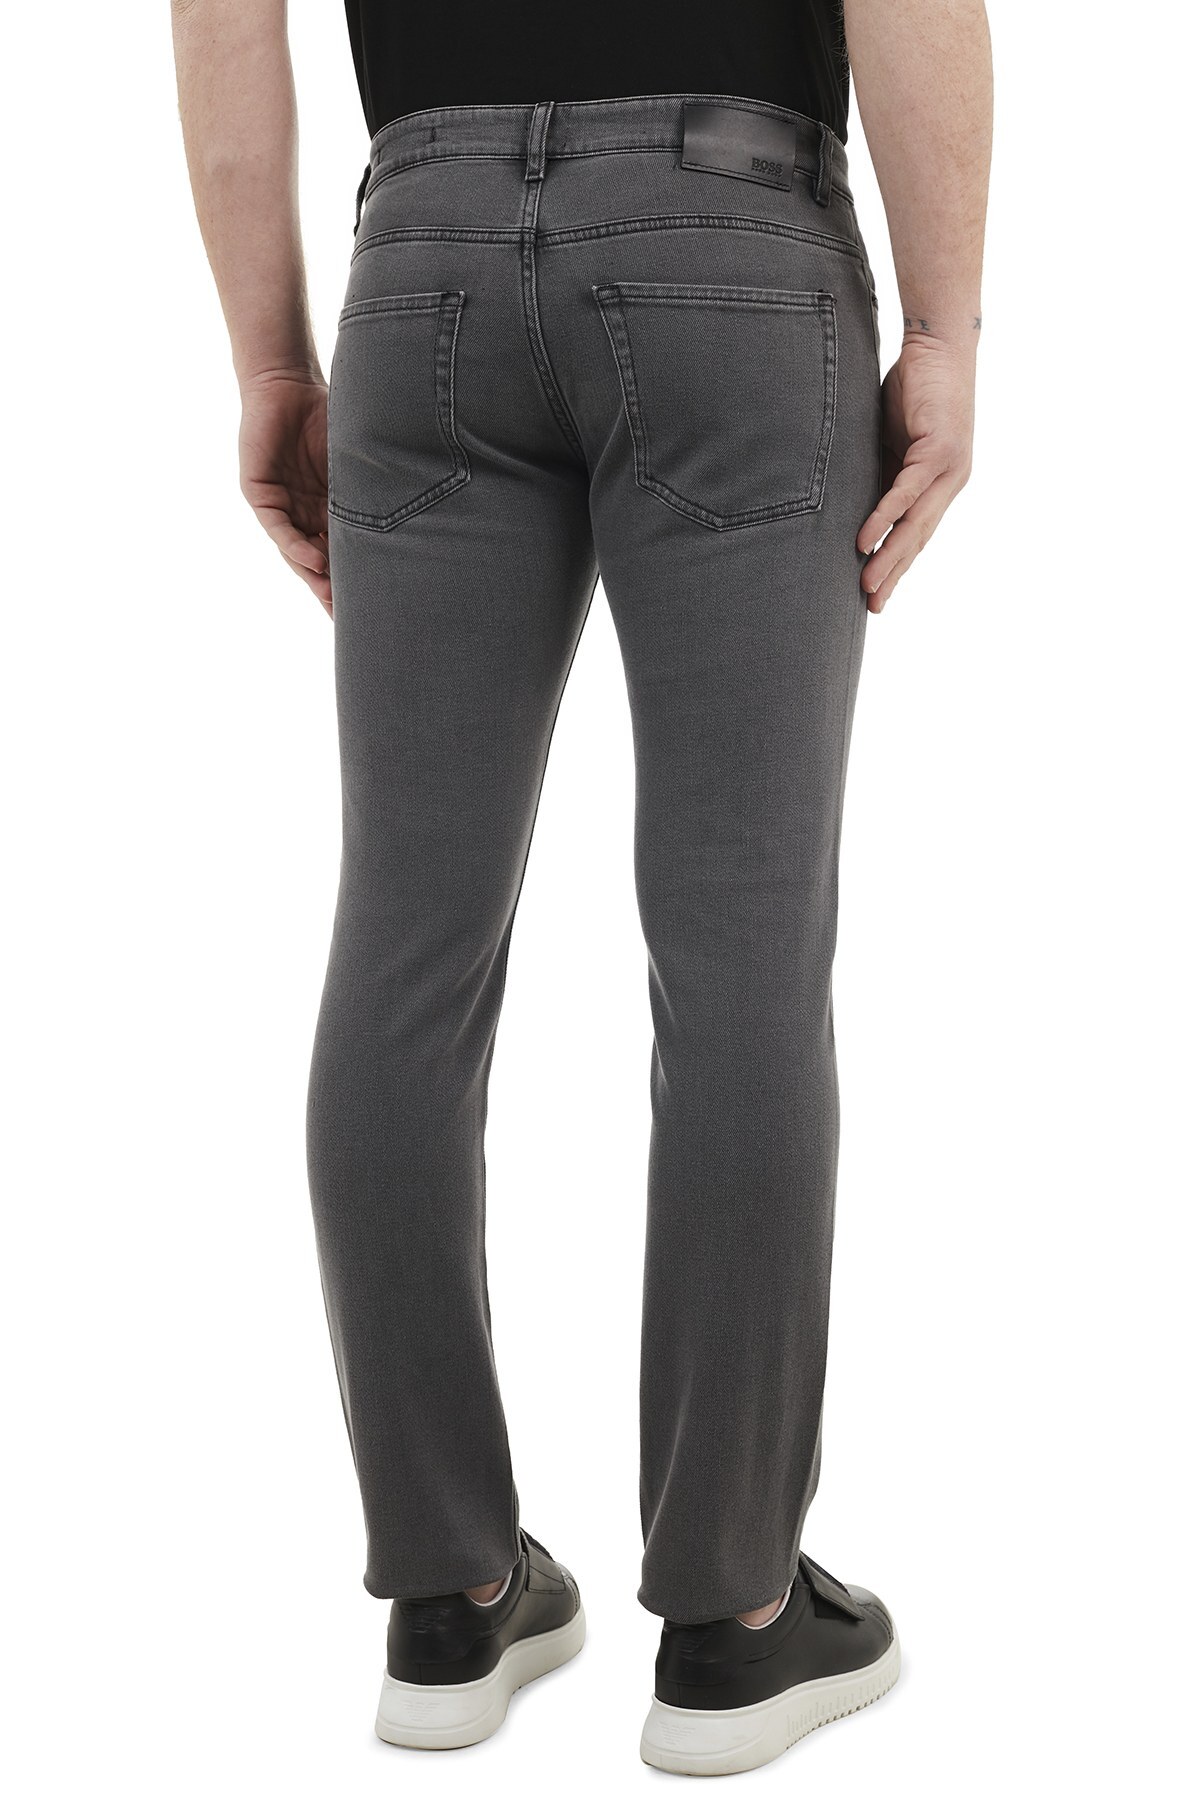 Hugo Boss Slim Fit Pamuklu Jeans Erkek Kot Pantolon 50443988 019 GRİ